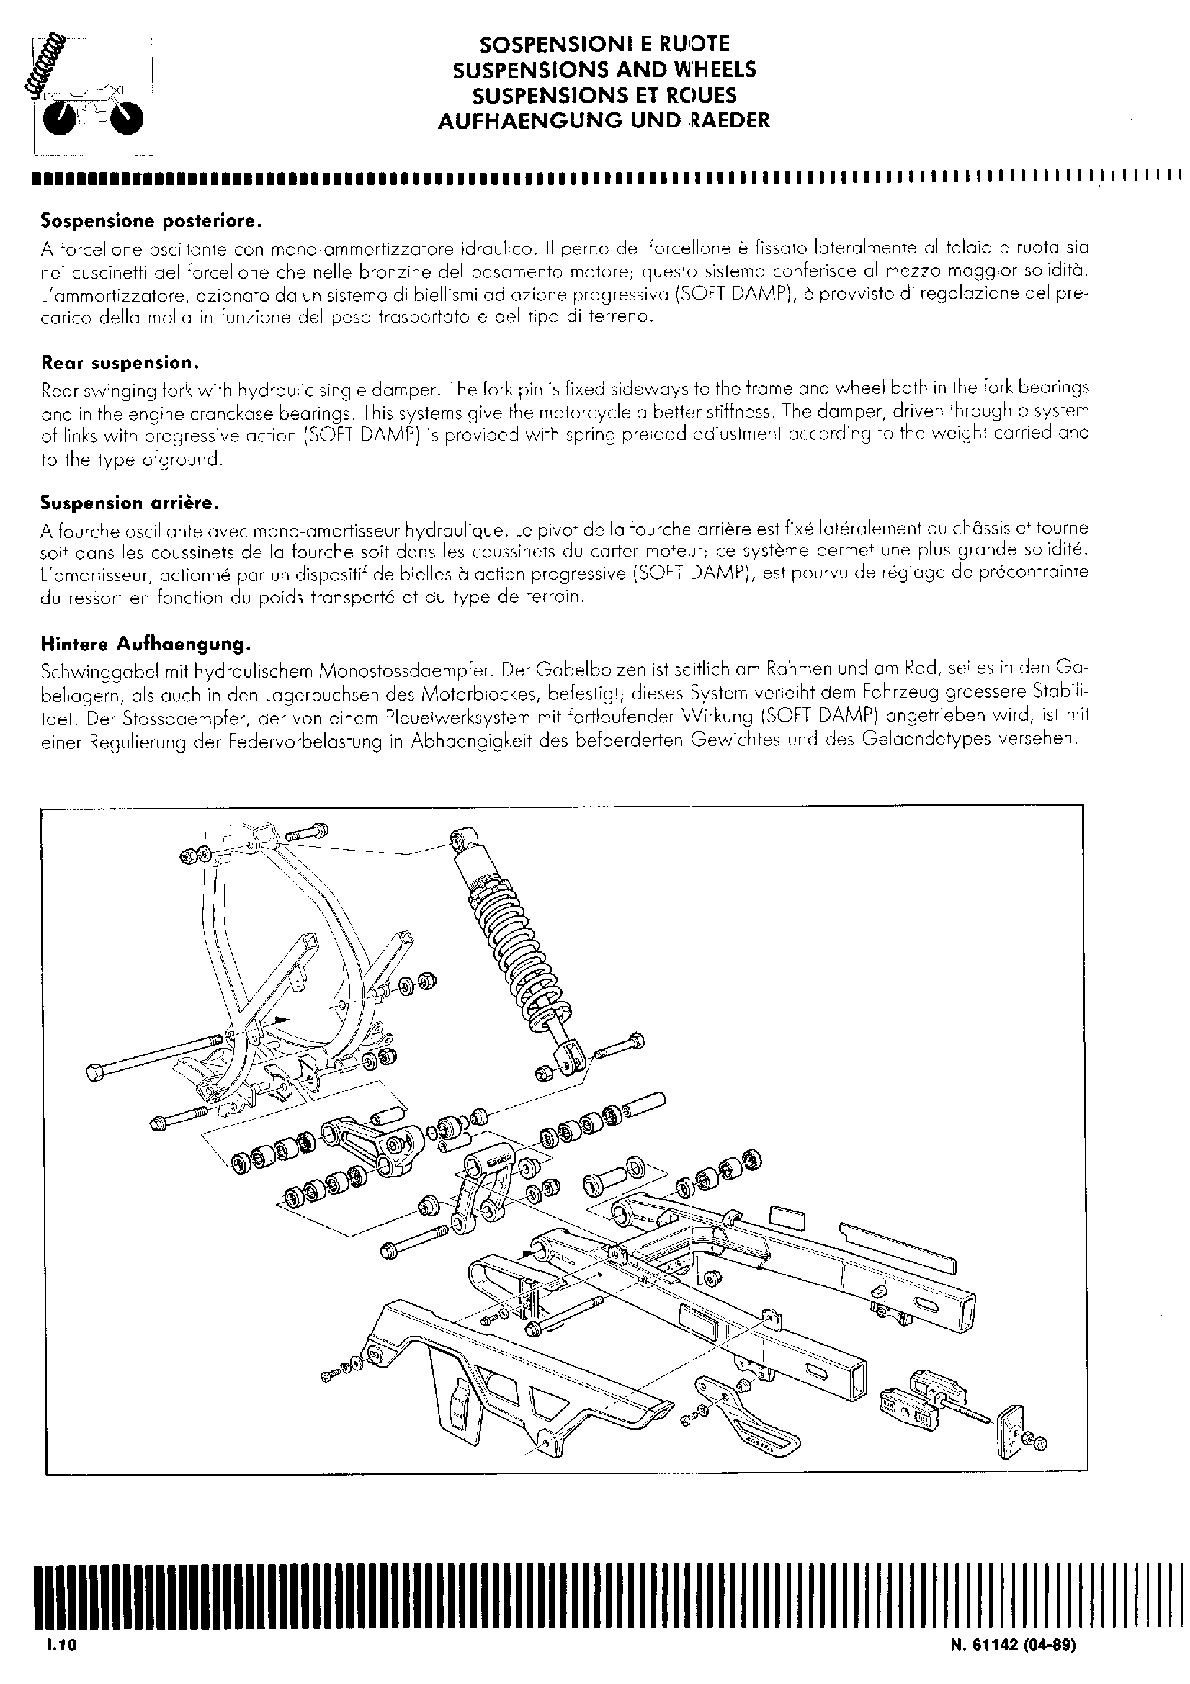 1988-1992 Cagiva Tamanaco 125 Service Manual